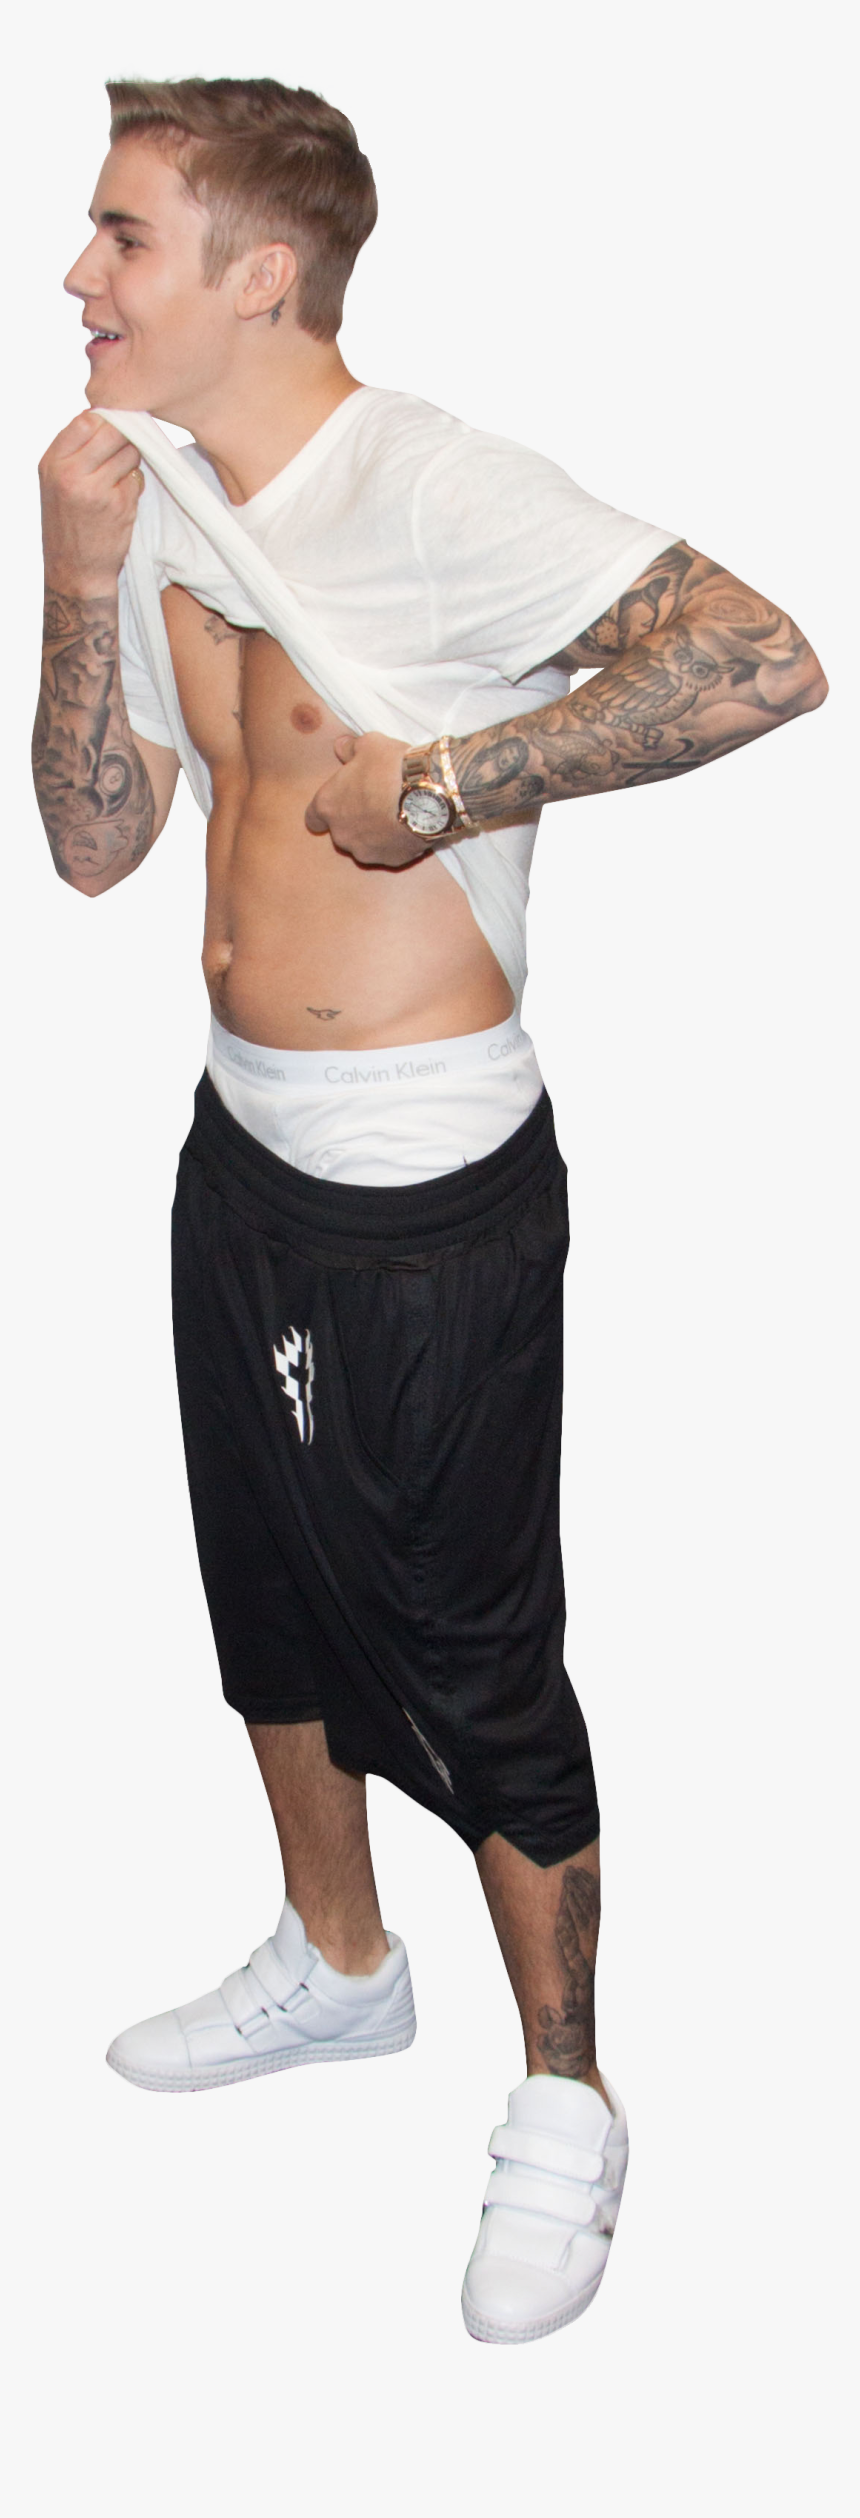 Justin Bieber Showing Sixpack Png Image - Justin Bieber Sixpack, Transparent Png, Free Download